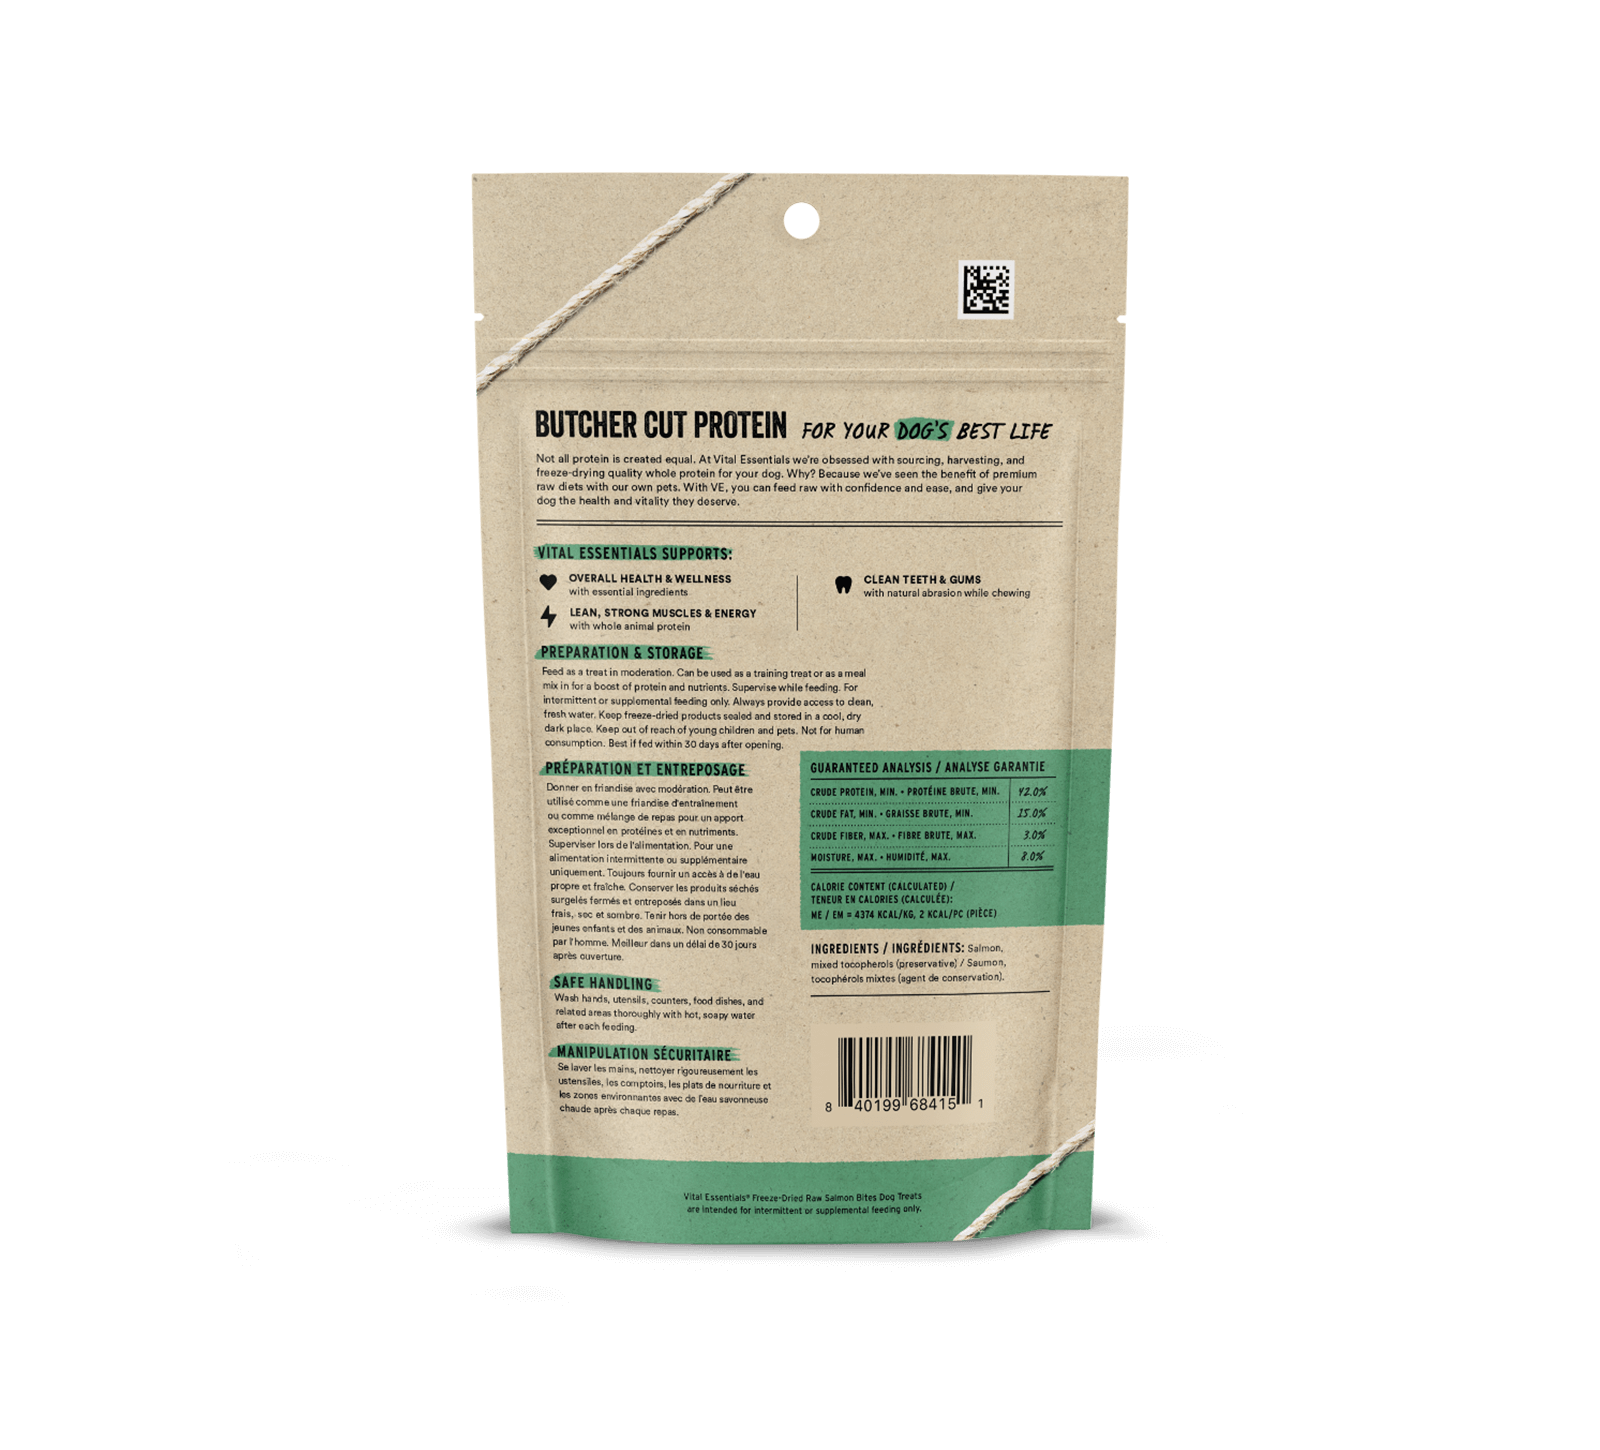 Vital Essentials Freeze-Dried Salmon Bites Dog Treats, 2.5-oz bag